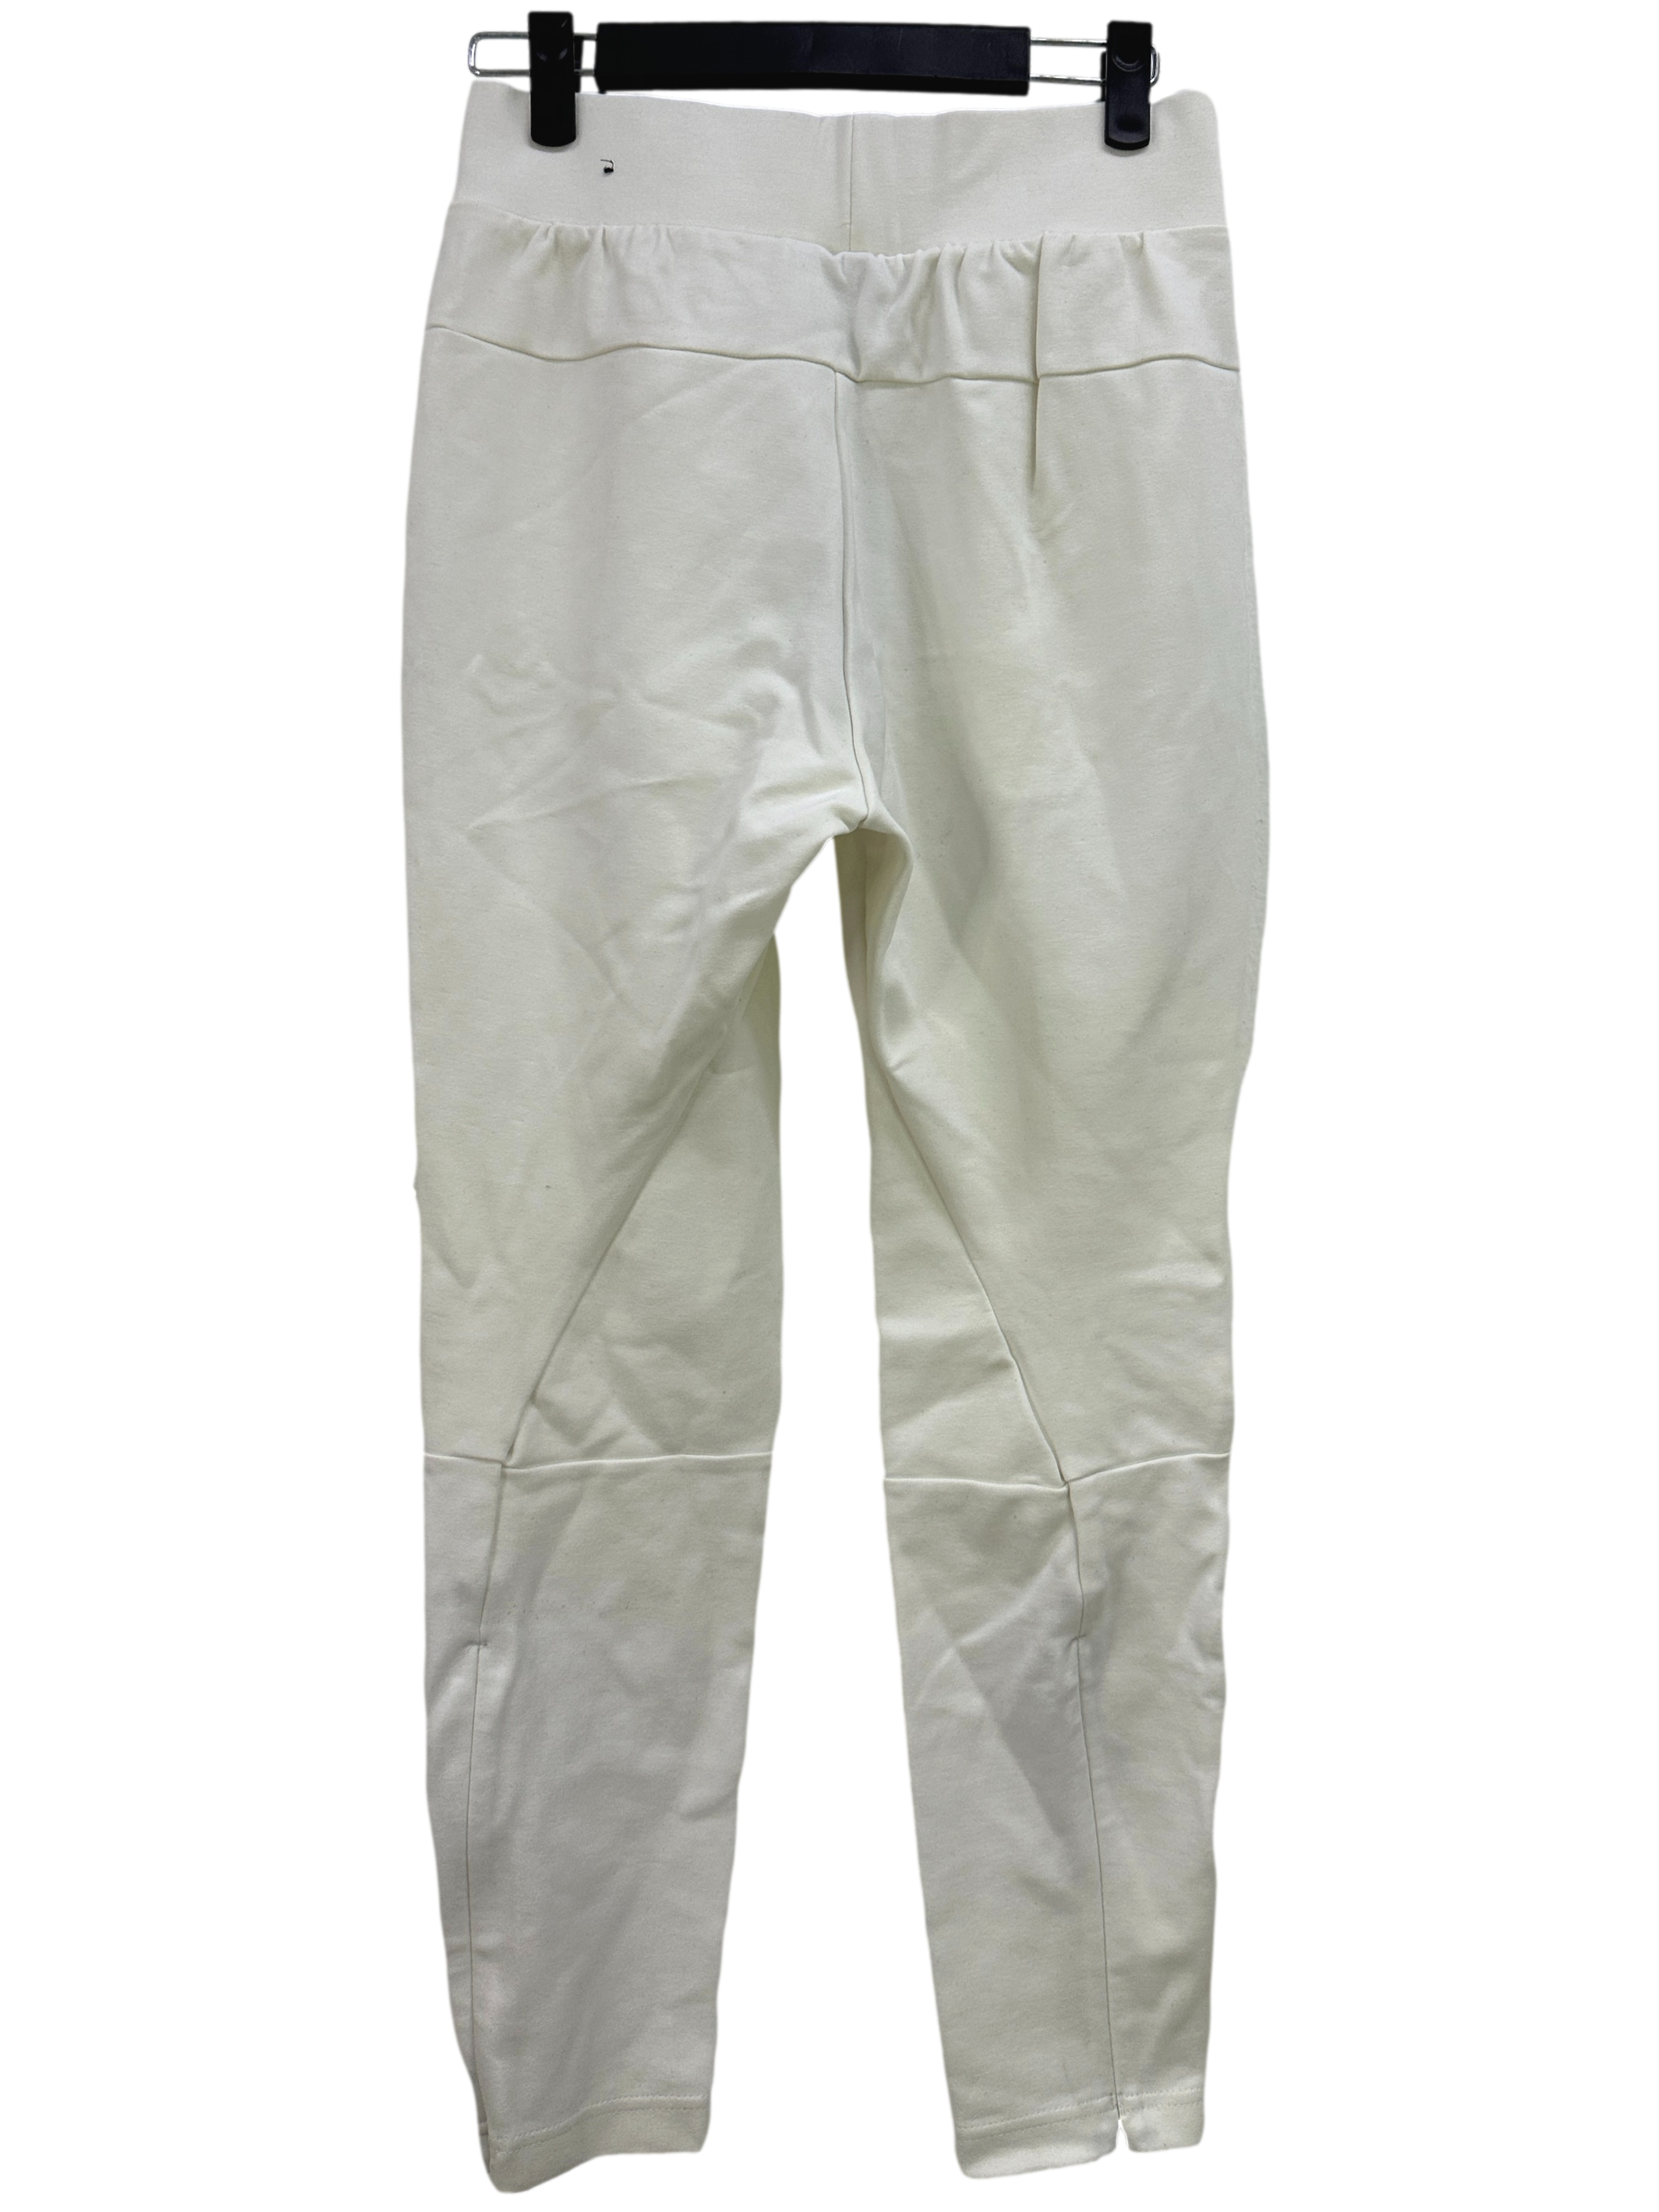 White Zippered Slim Fit Sweatpants